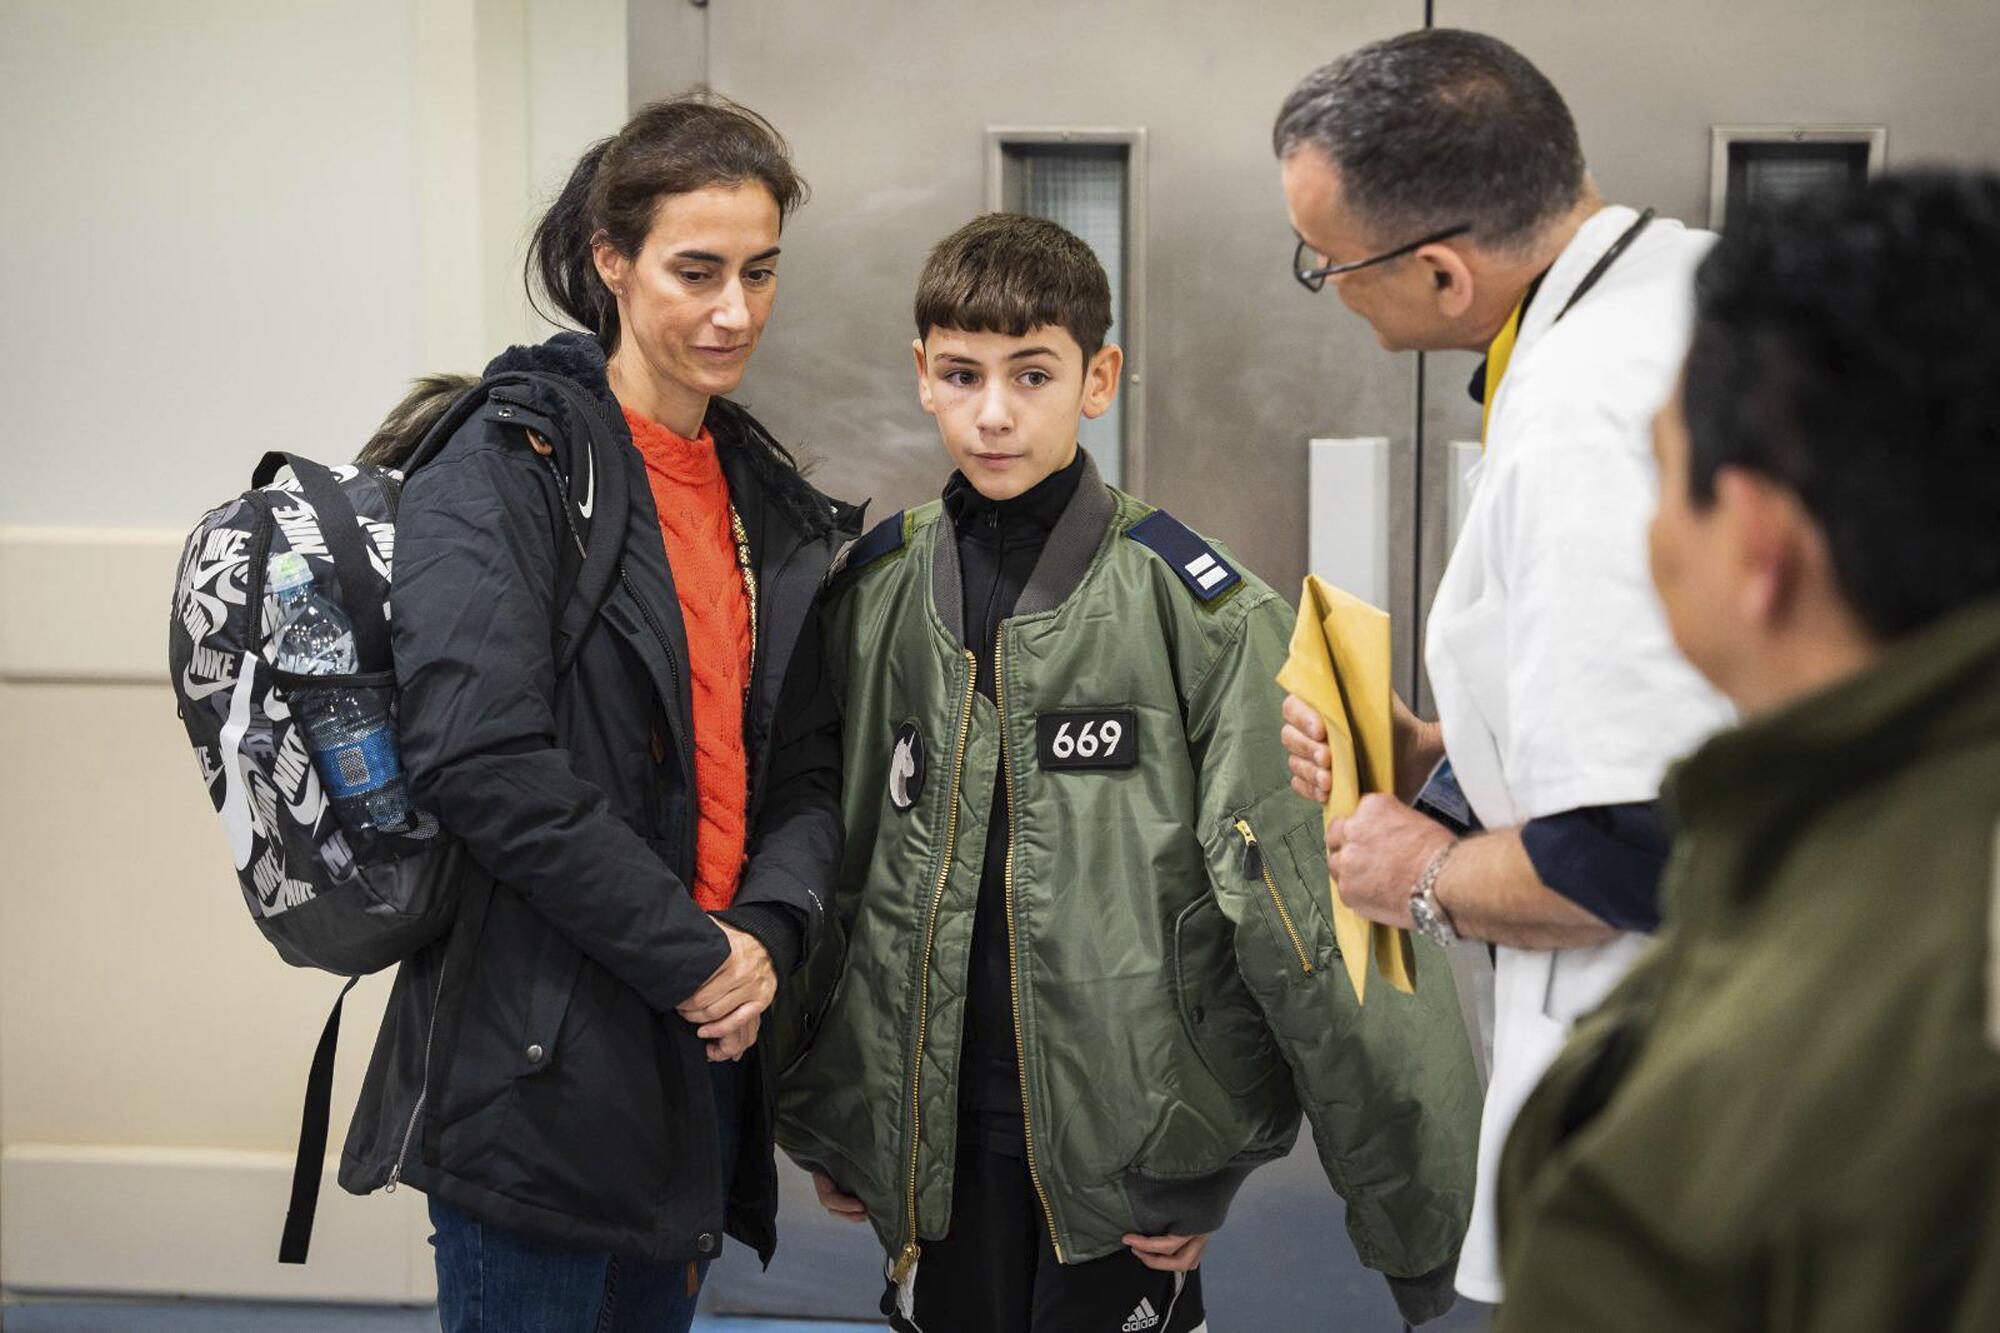 Boy held hostage arriving at hospital in Israel